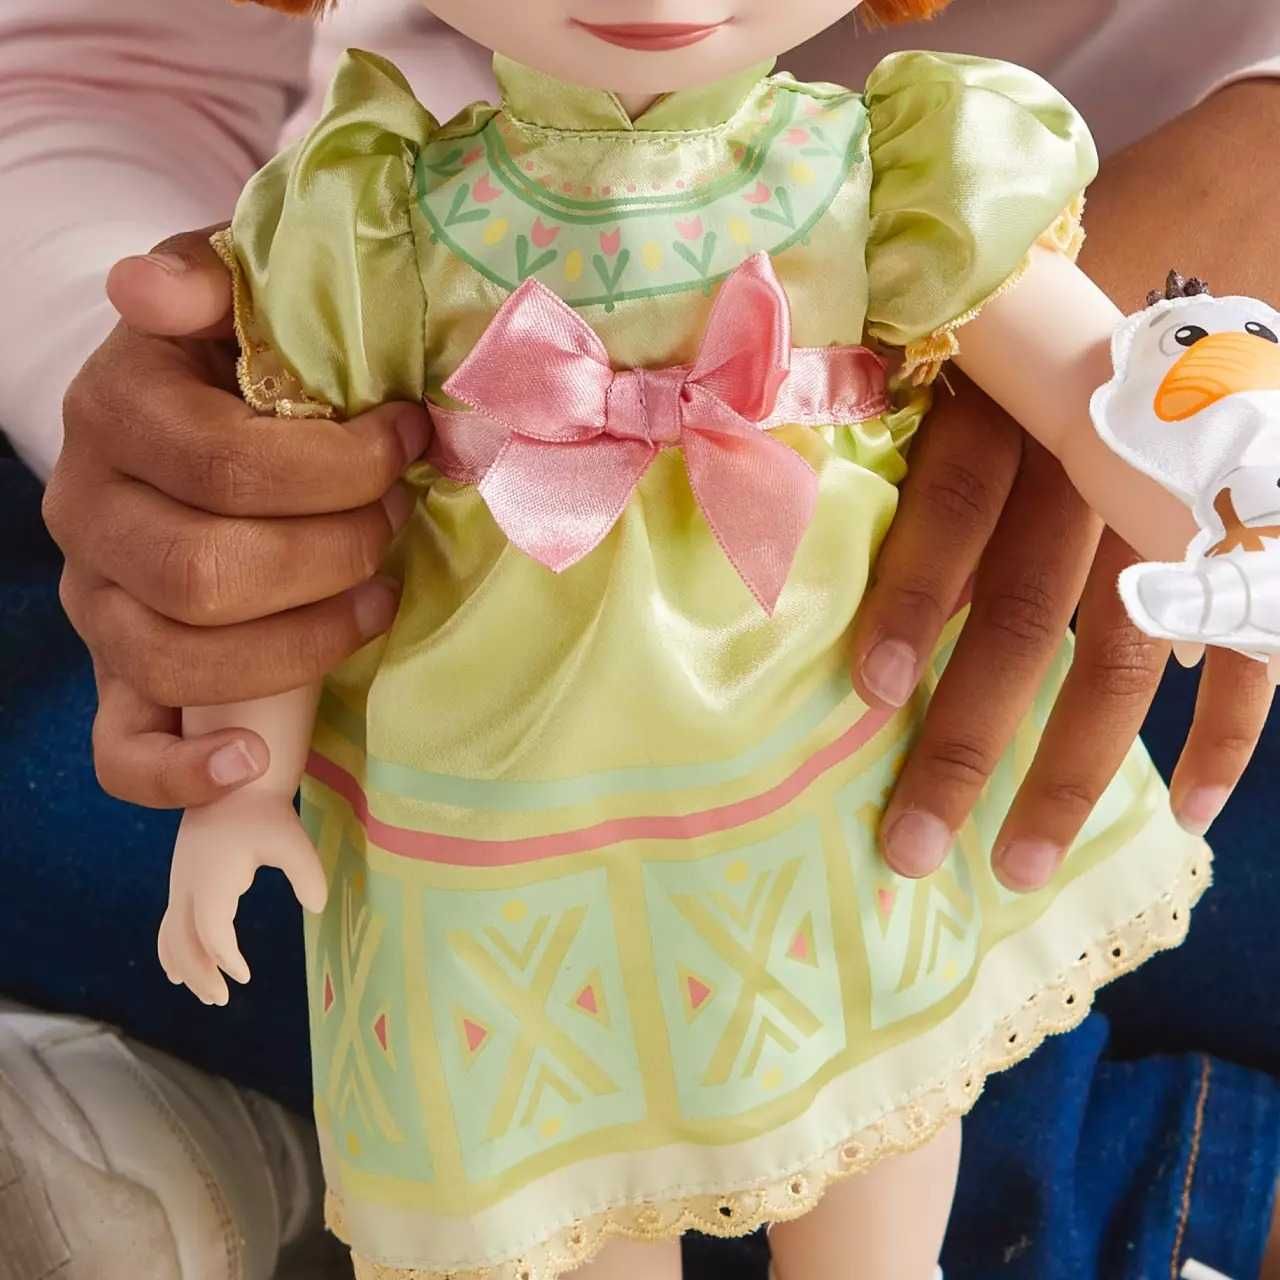 Кукла принцесса Анна м/ф" Холодное сердце" Disney Animators